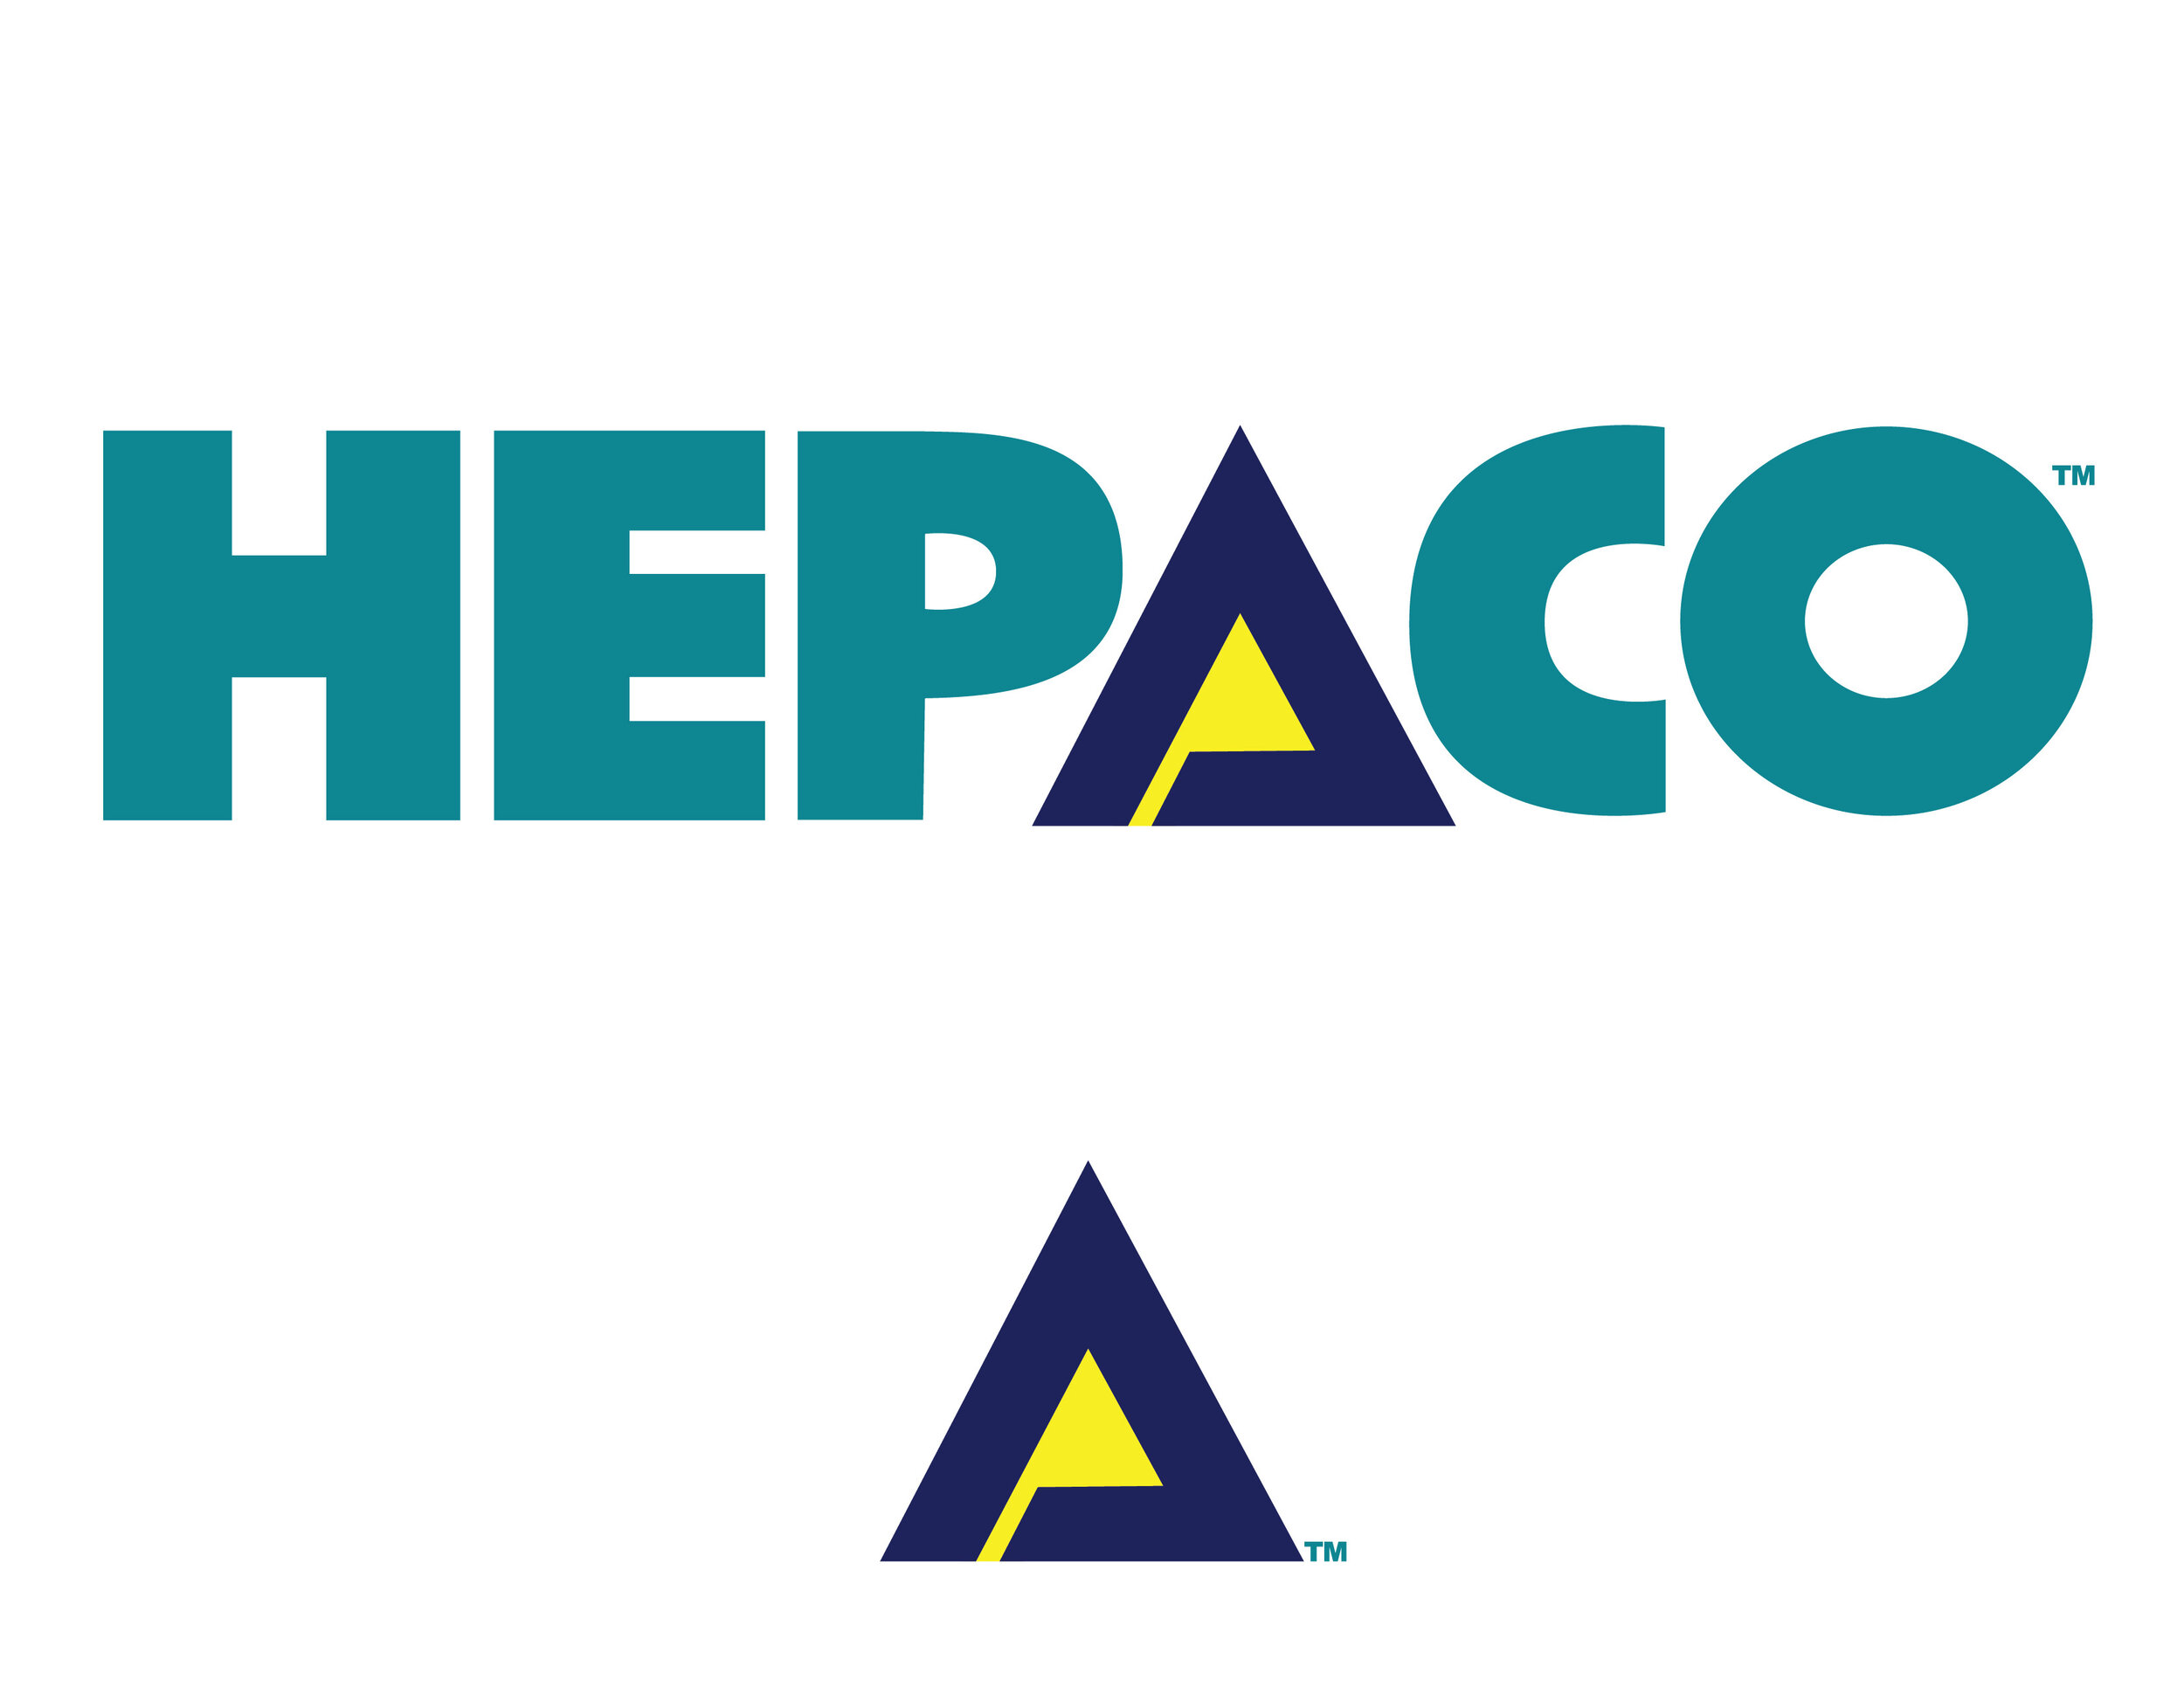 HEPACO_LOGO_recreated_nvisionativeJPG.jpg